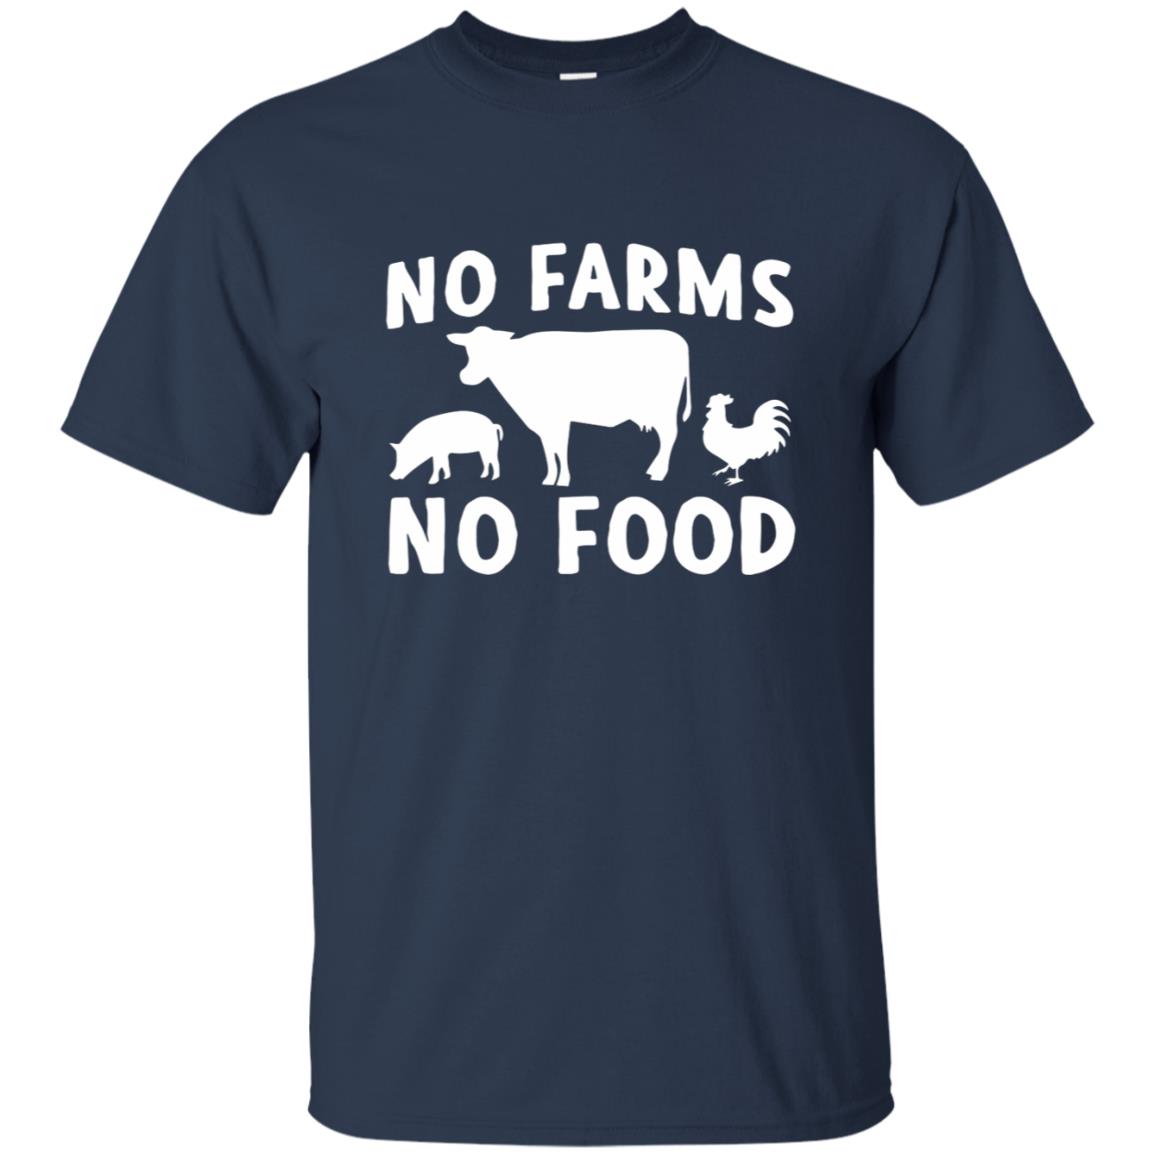 No Farms No Food Shirt - 10% Off - FavorMerch